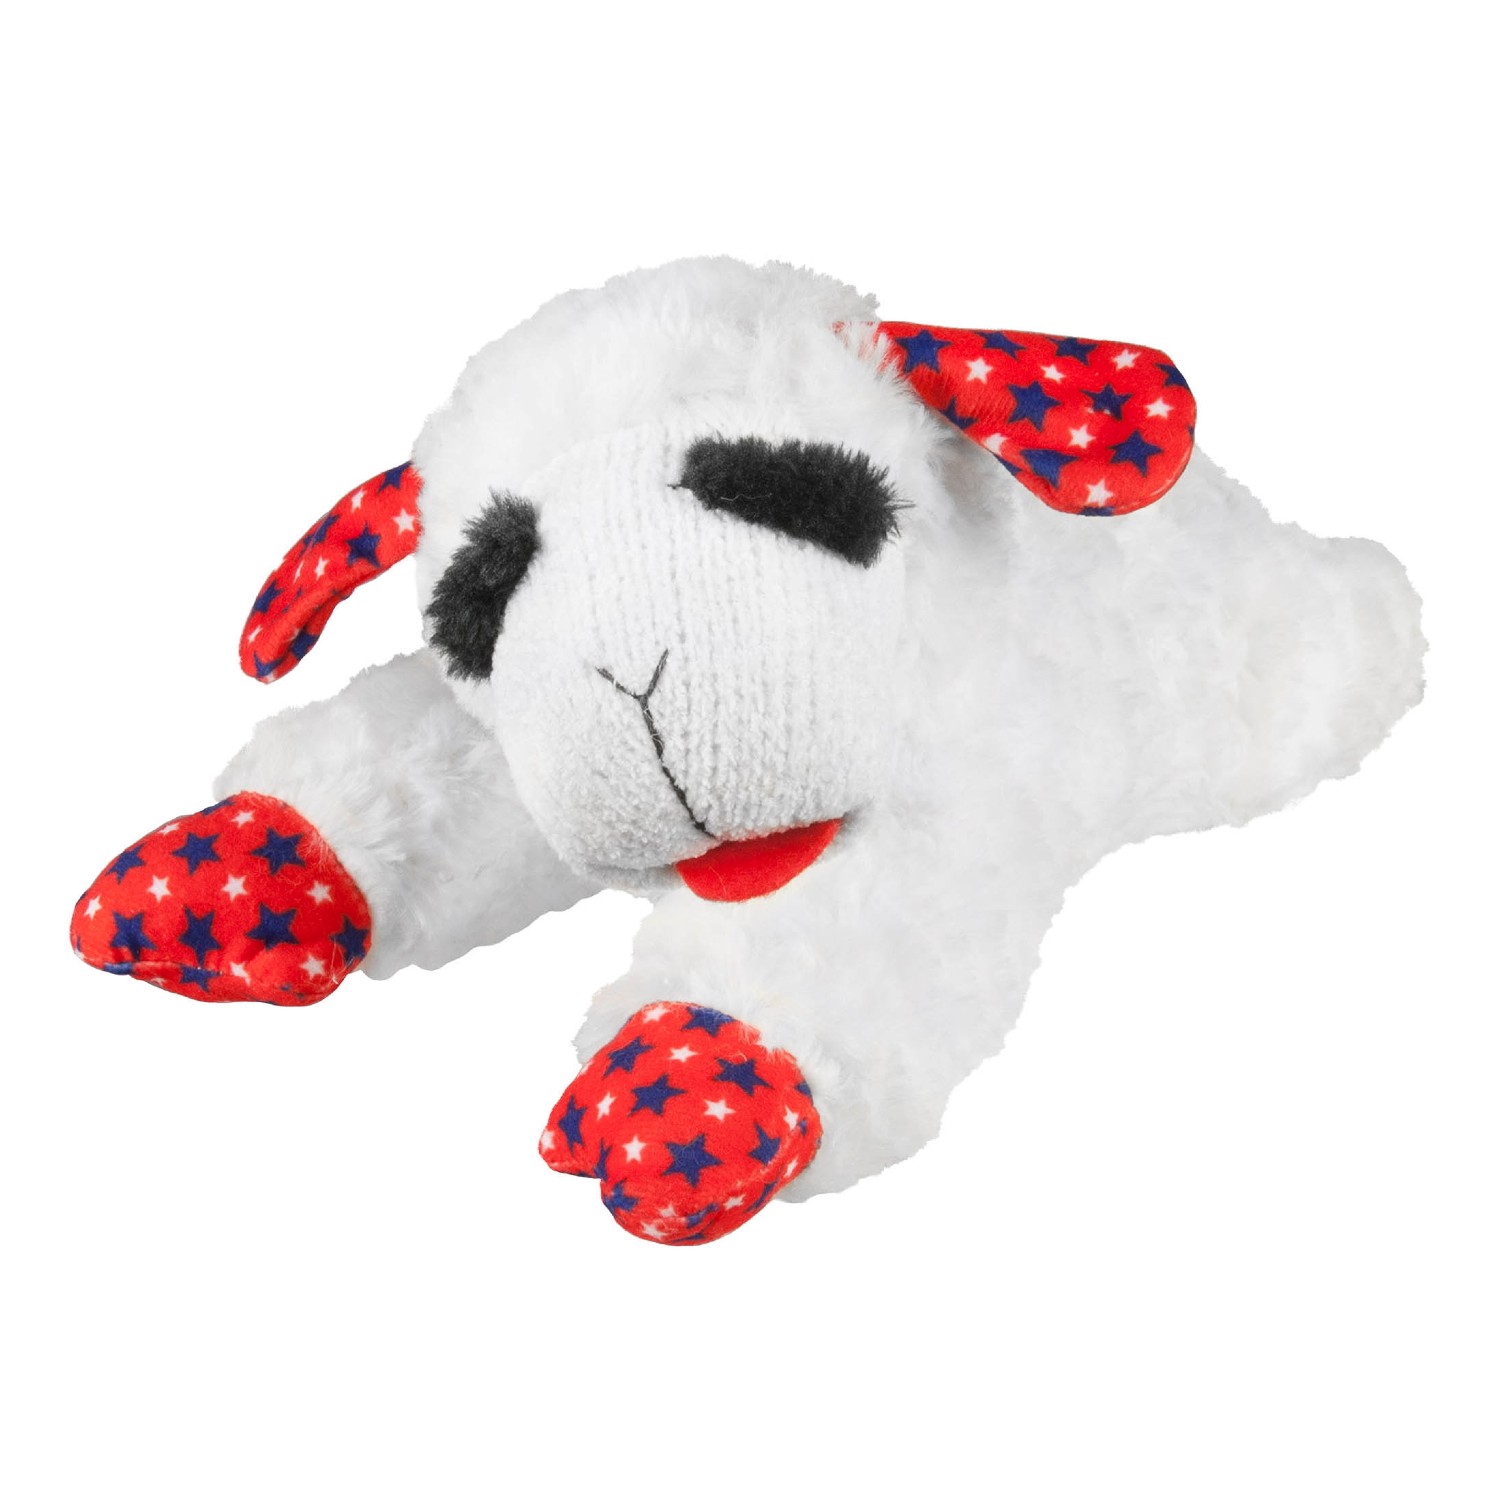 Multipet Lamb Chop Dog Toy - Patriotic